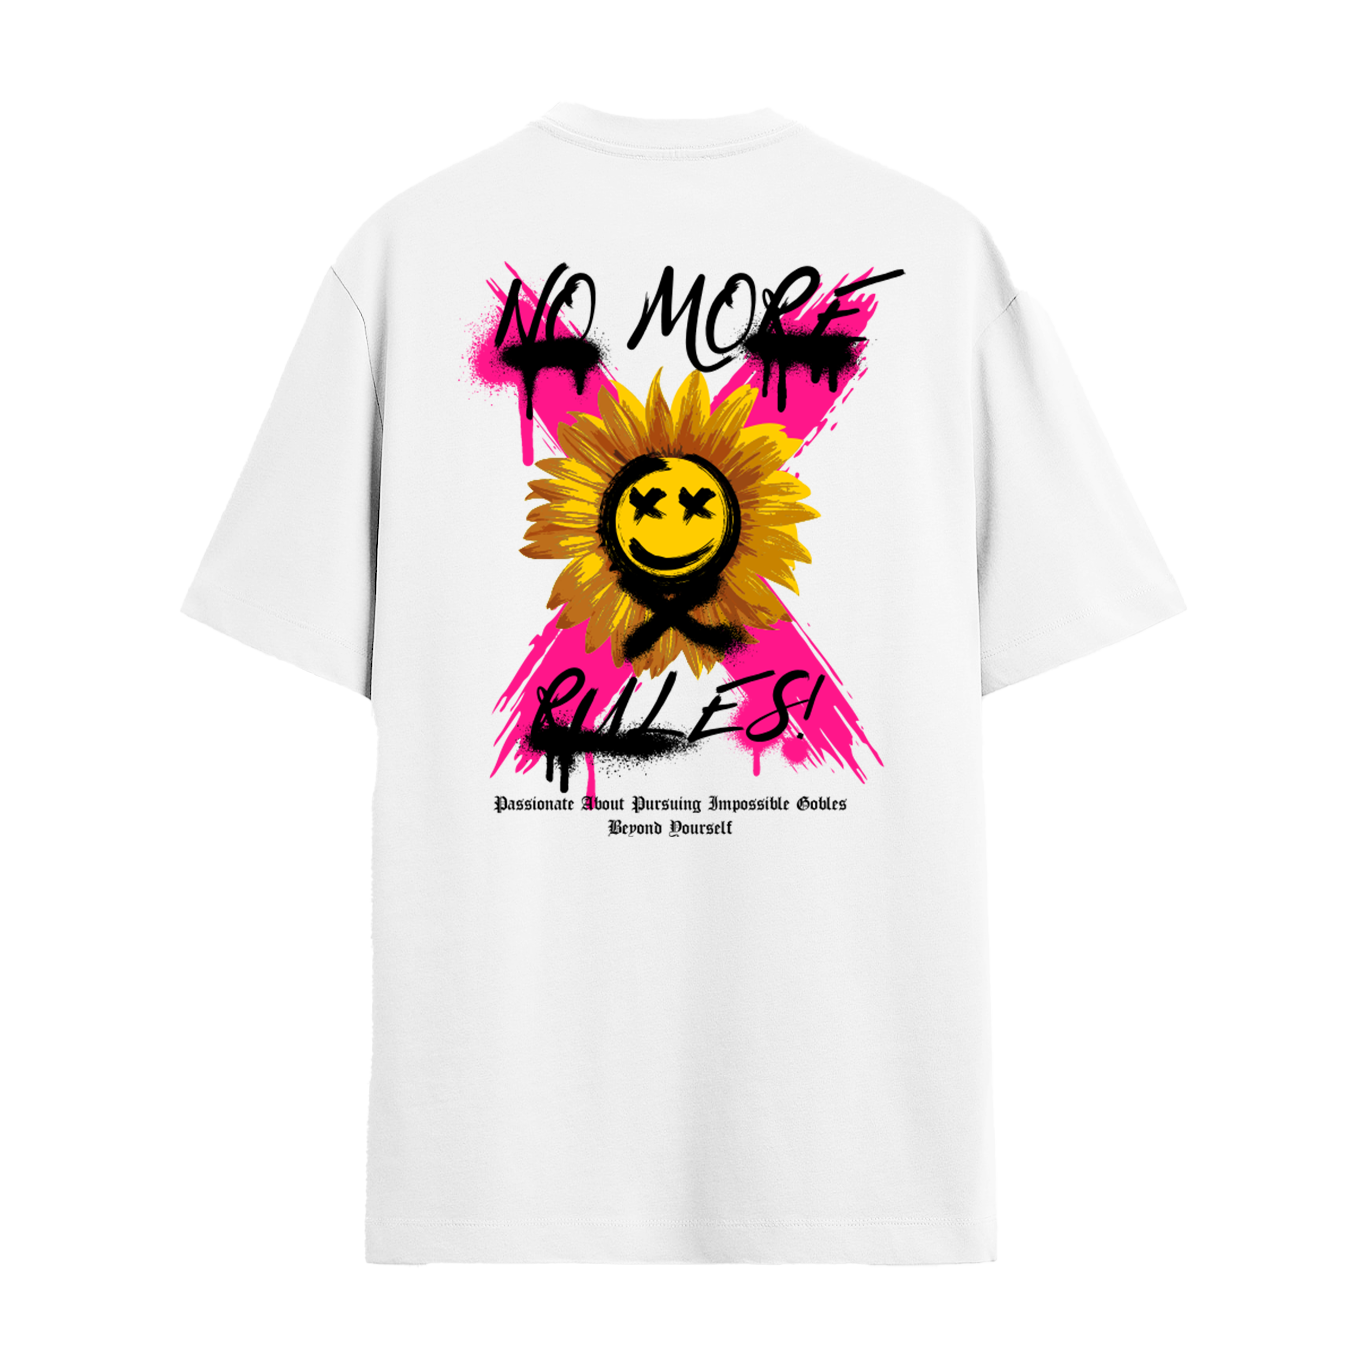 T-shirt "No More Rules"